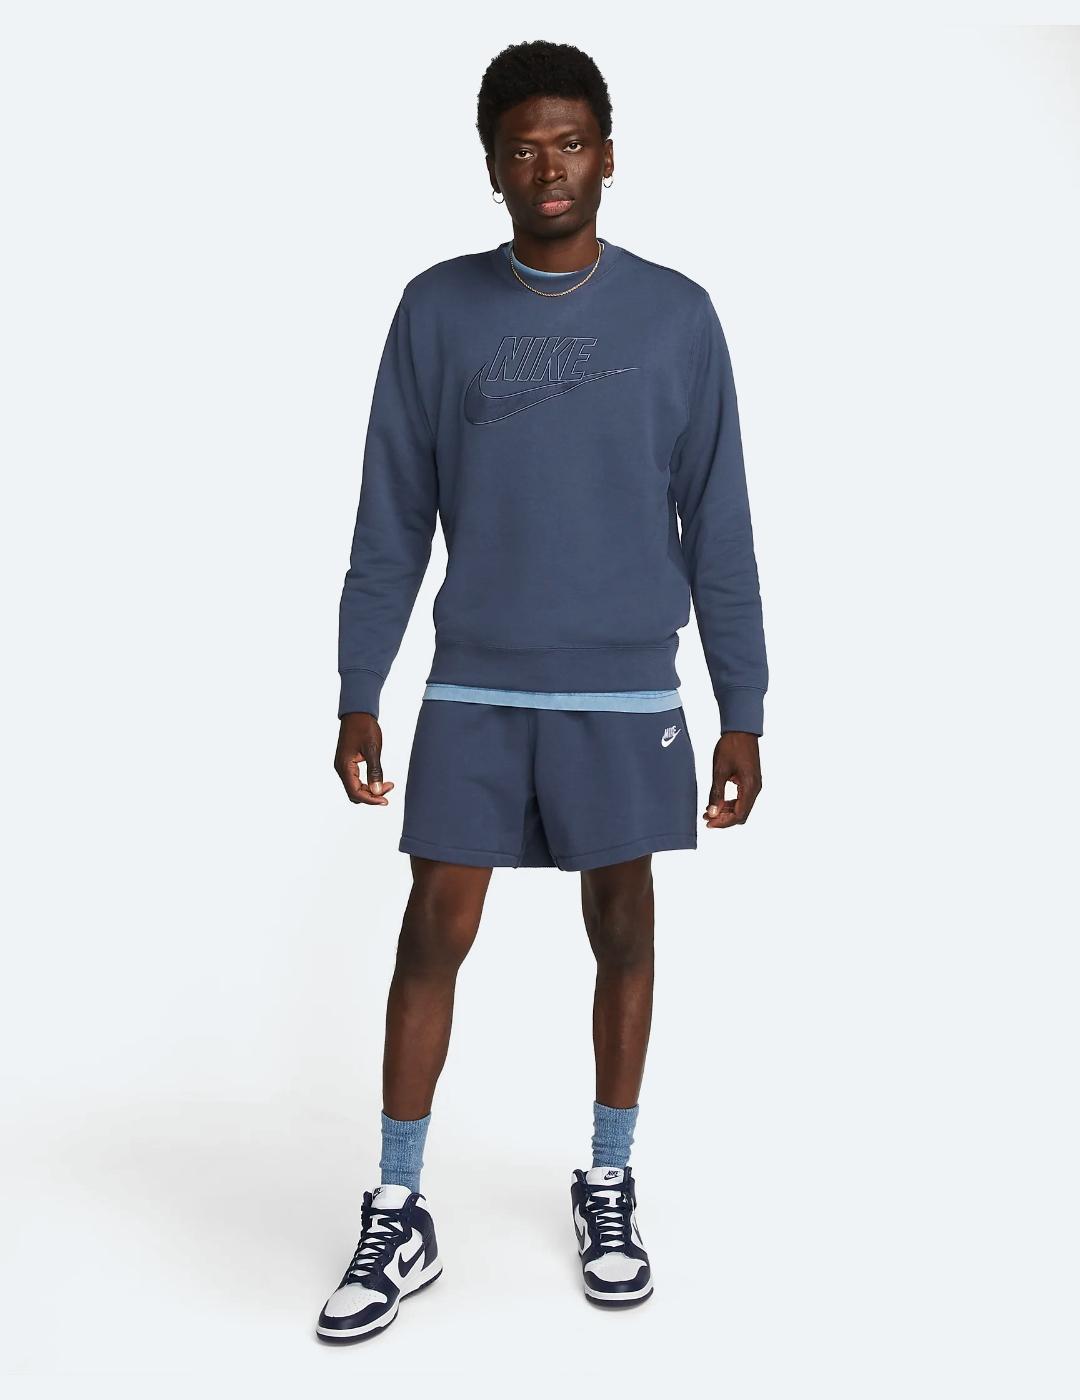 Sudadera Nike azul marino logo bordado